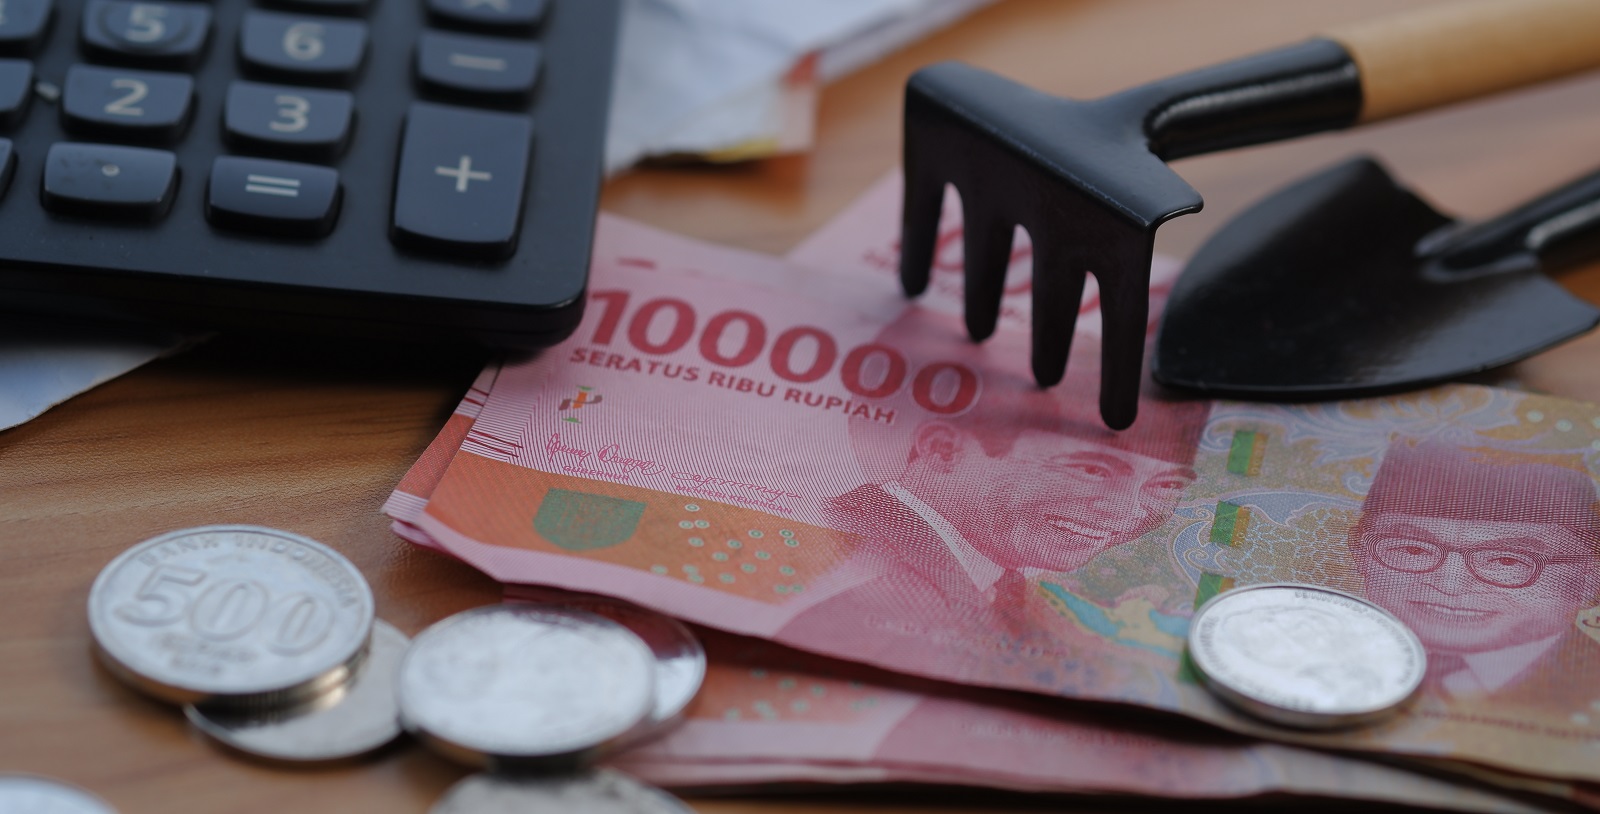 Nasabah versus Bank: Fraudulent Transaction